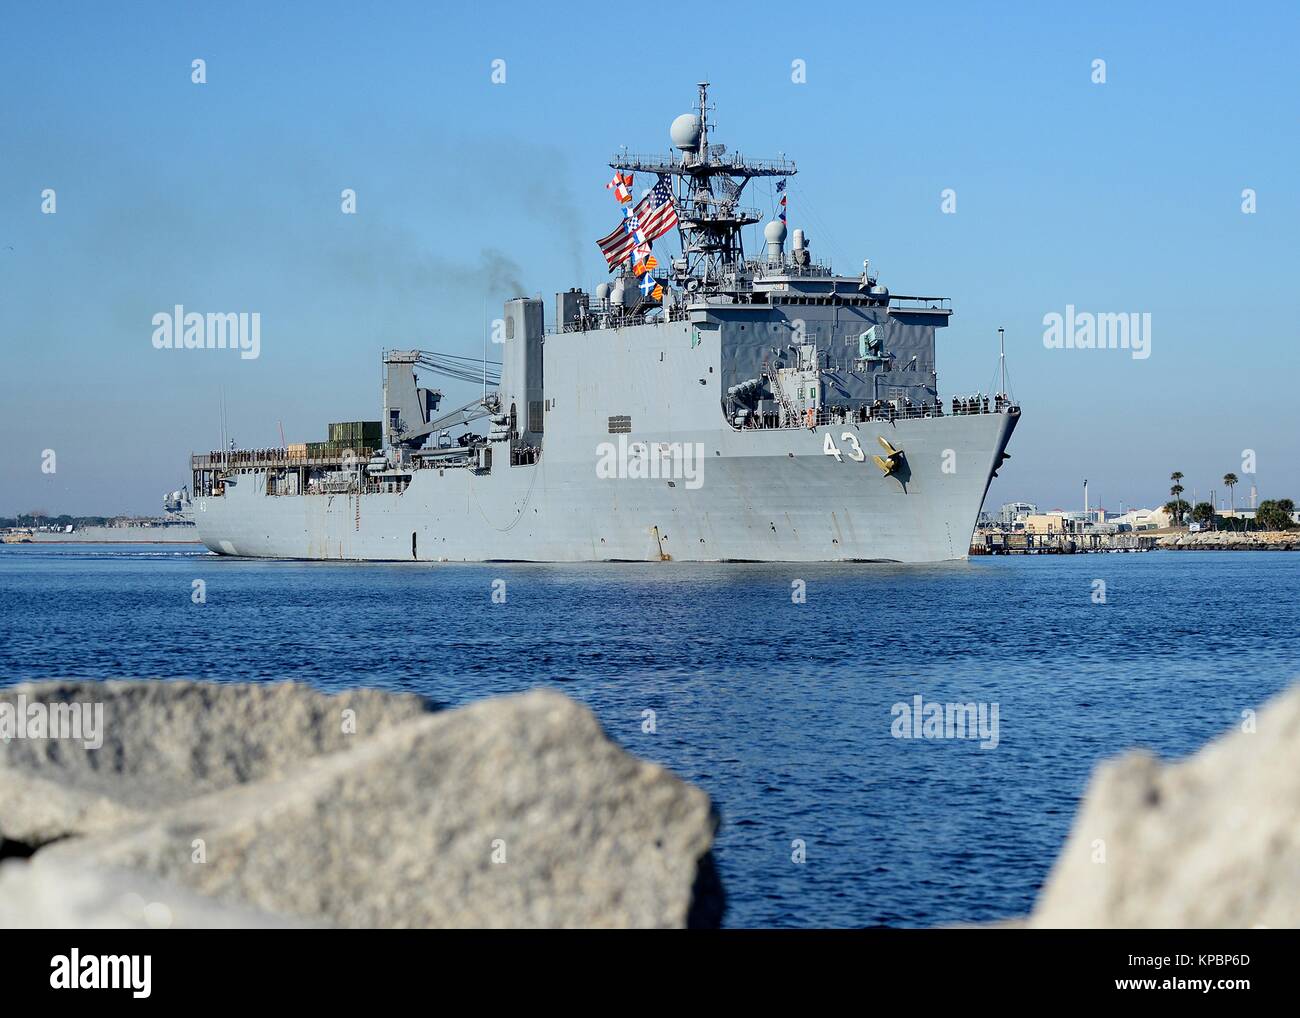 Gli Stati Uniti Navy Whidbey Island-classe dock anfibio sbarco nave USS Fort McHenry si diparte dalla Naval Station Mayport Dicembre 13, 2014 a Mayport, Florida. Foto Stock